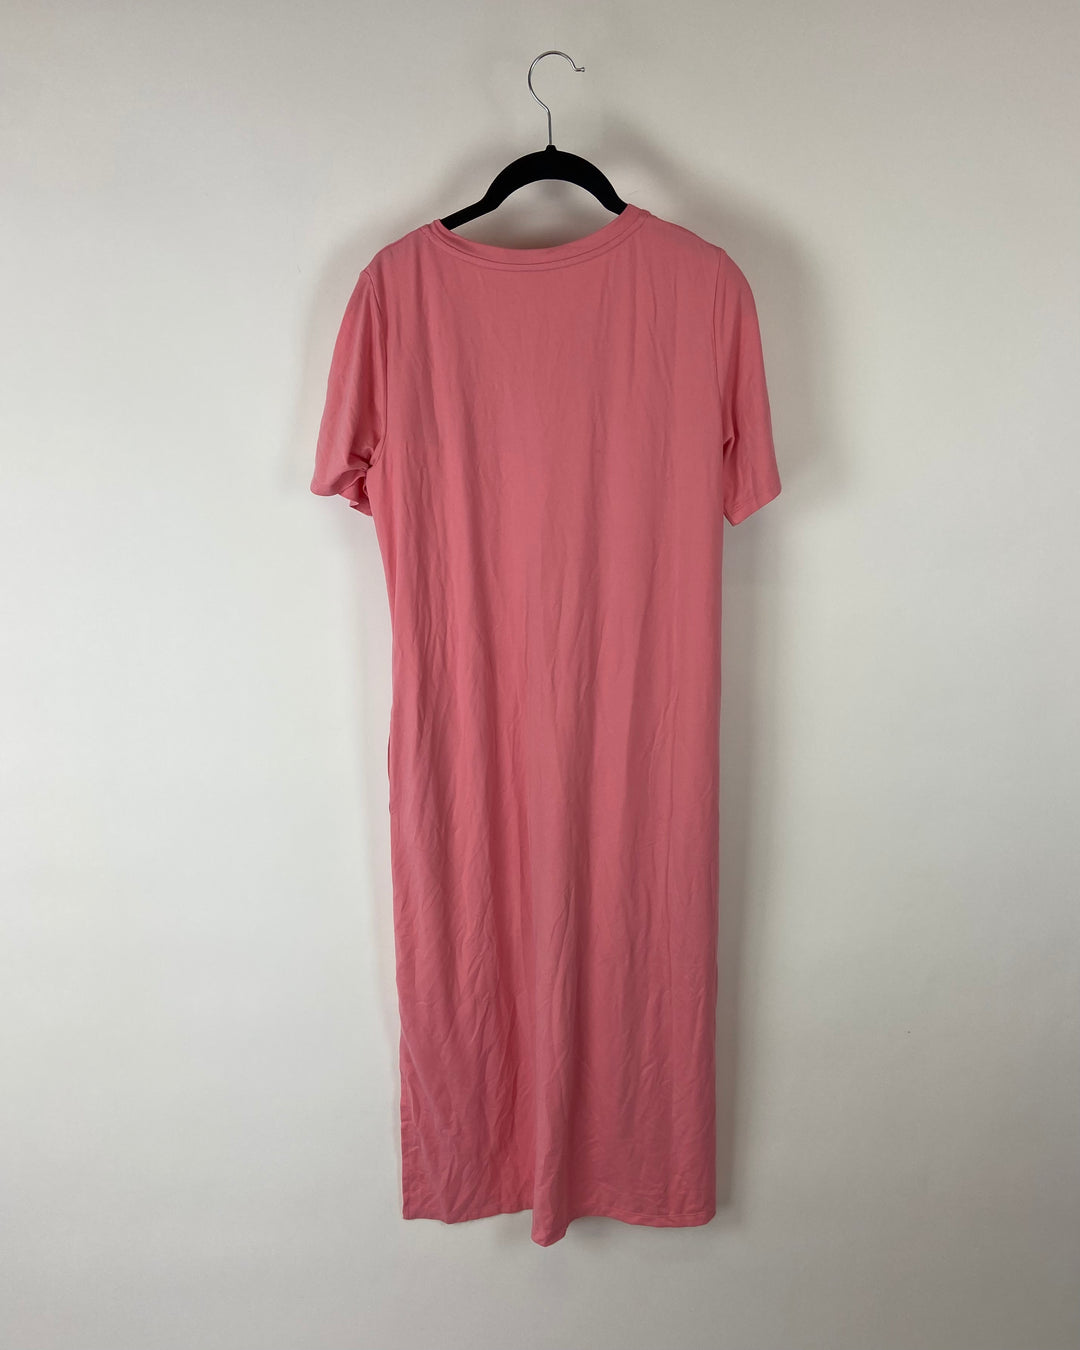 Salmon Pink Maxi Dress - Size 6/8